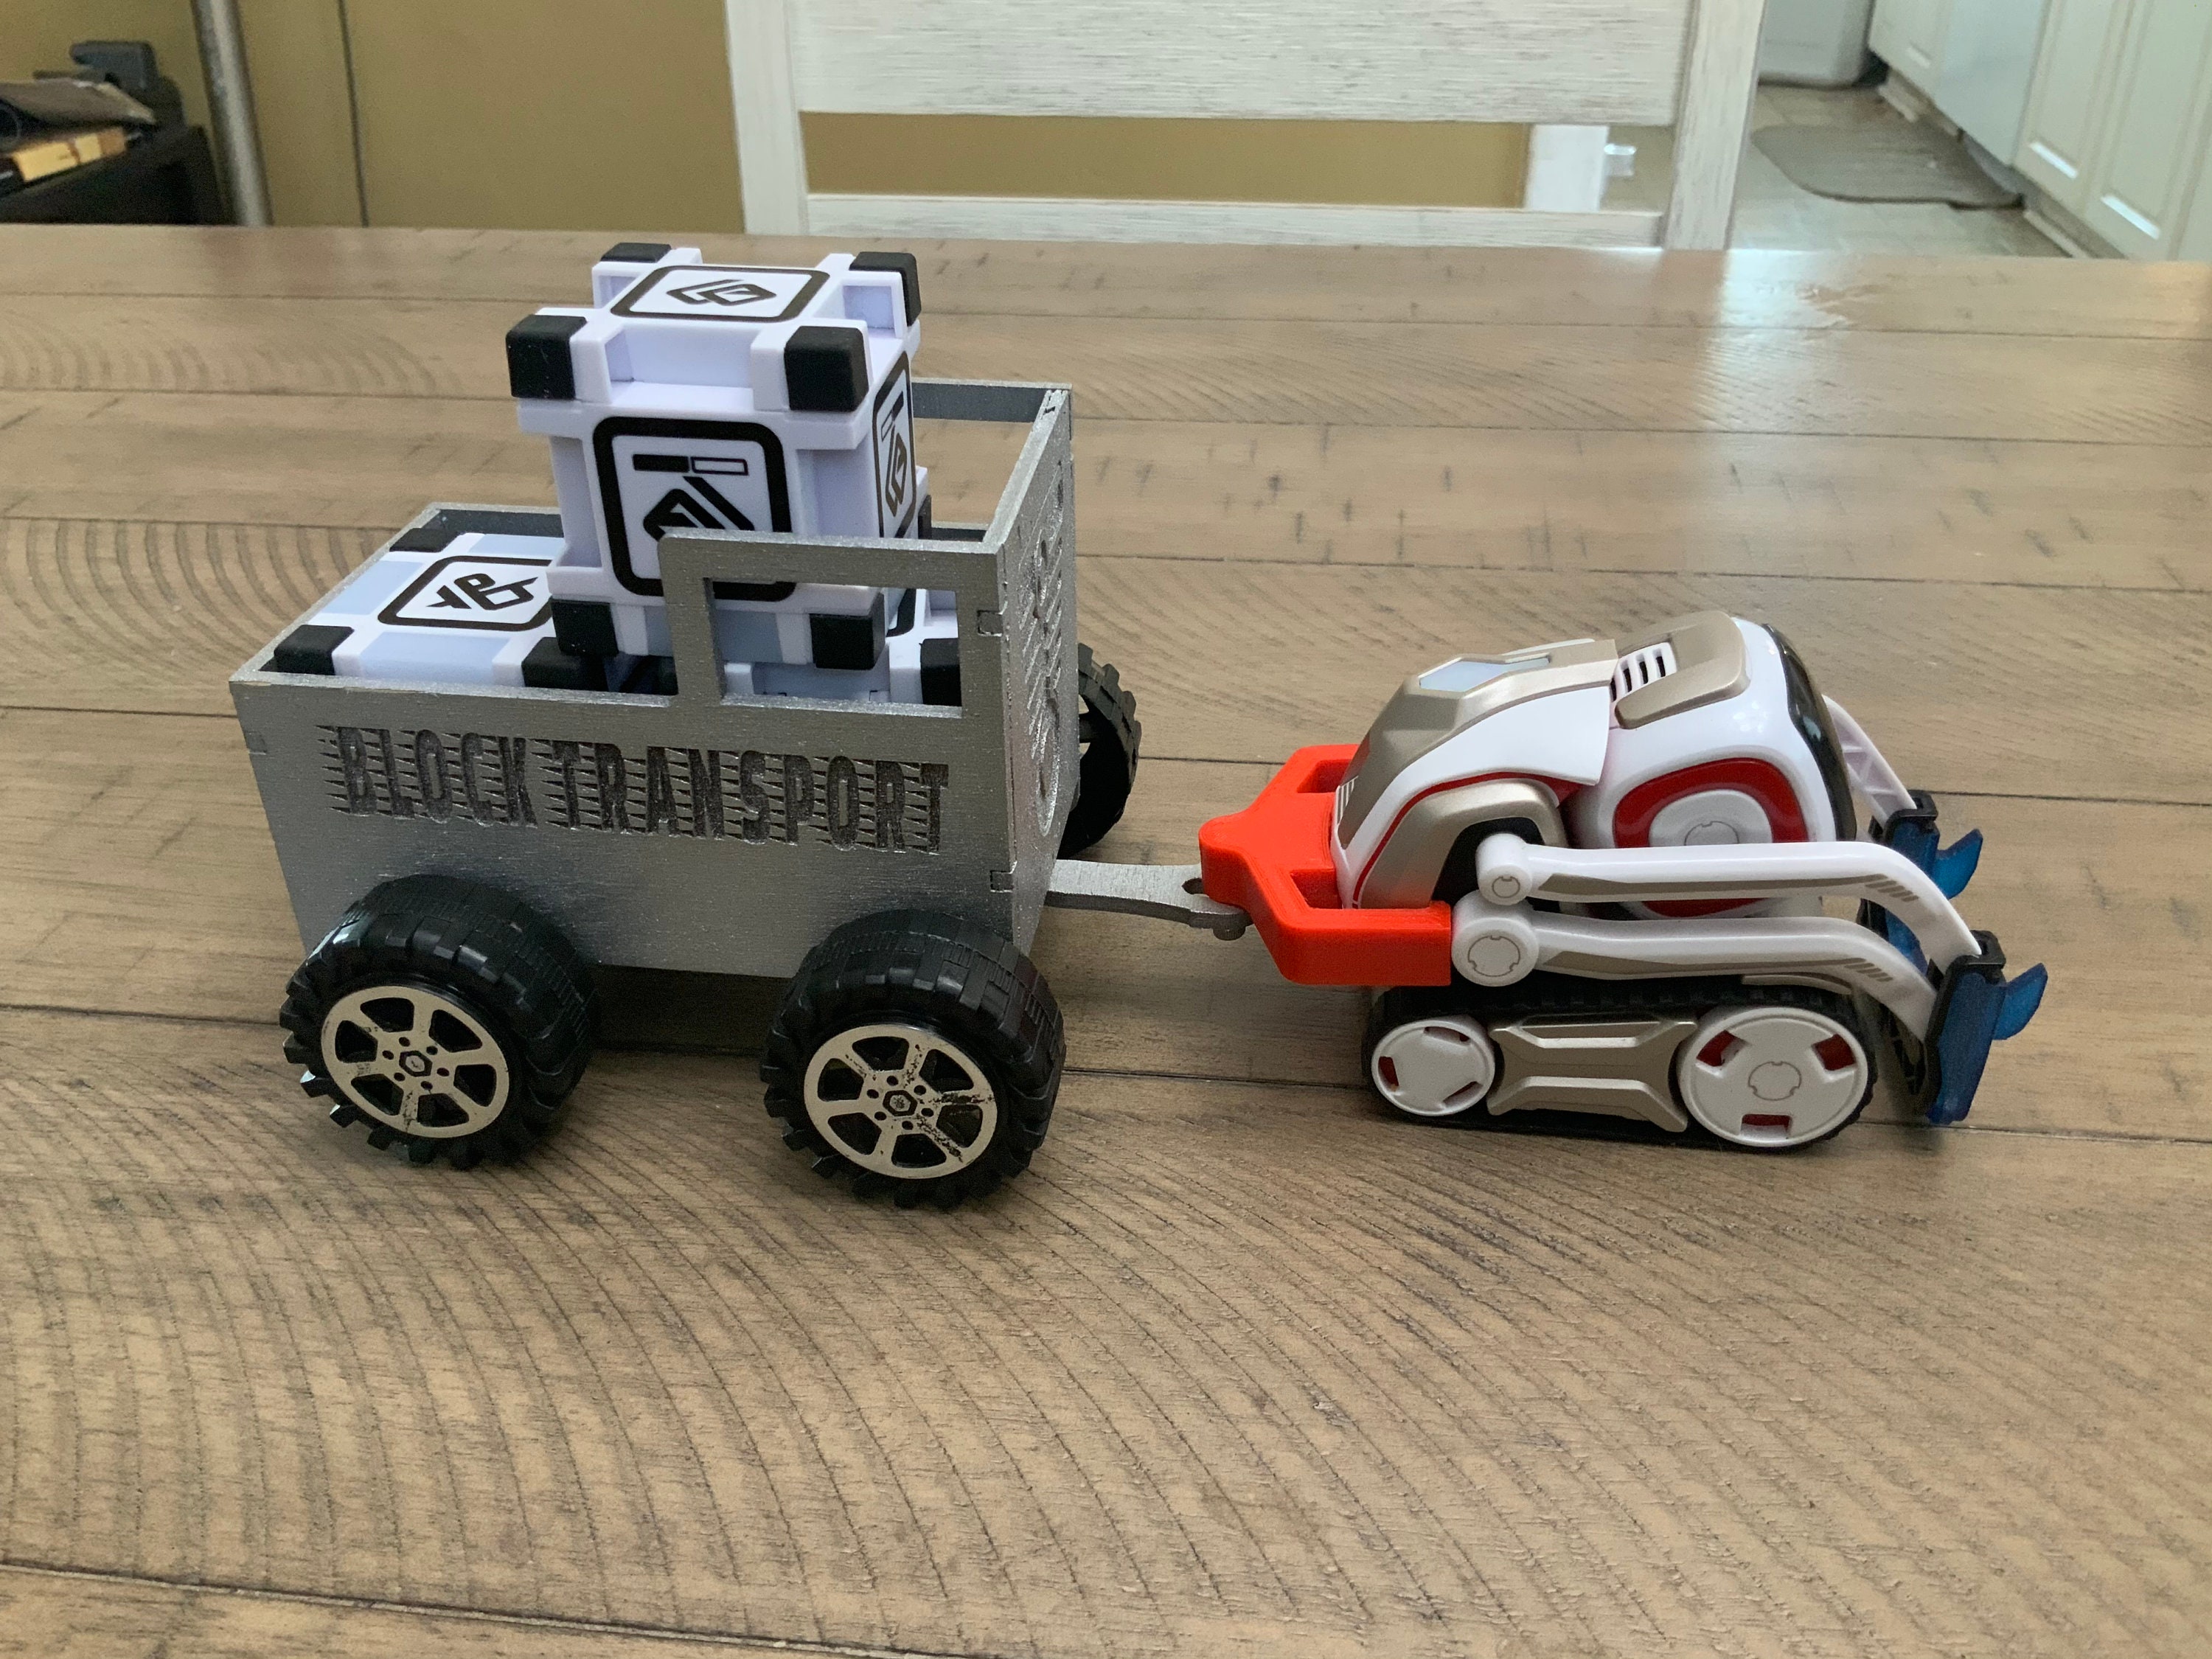 Anki's Cozmo Robot — Tools and Toys